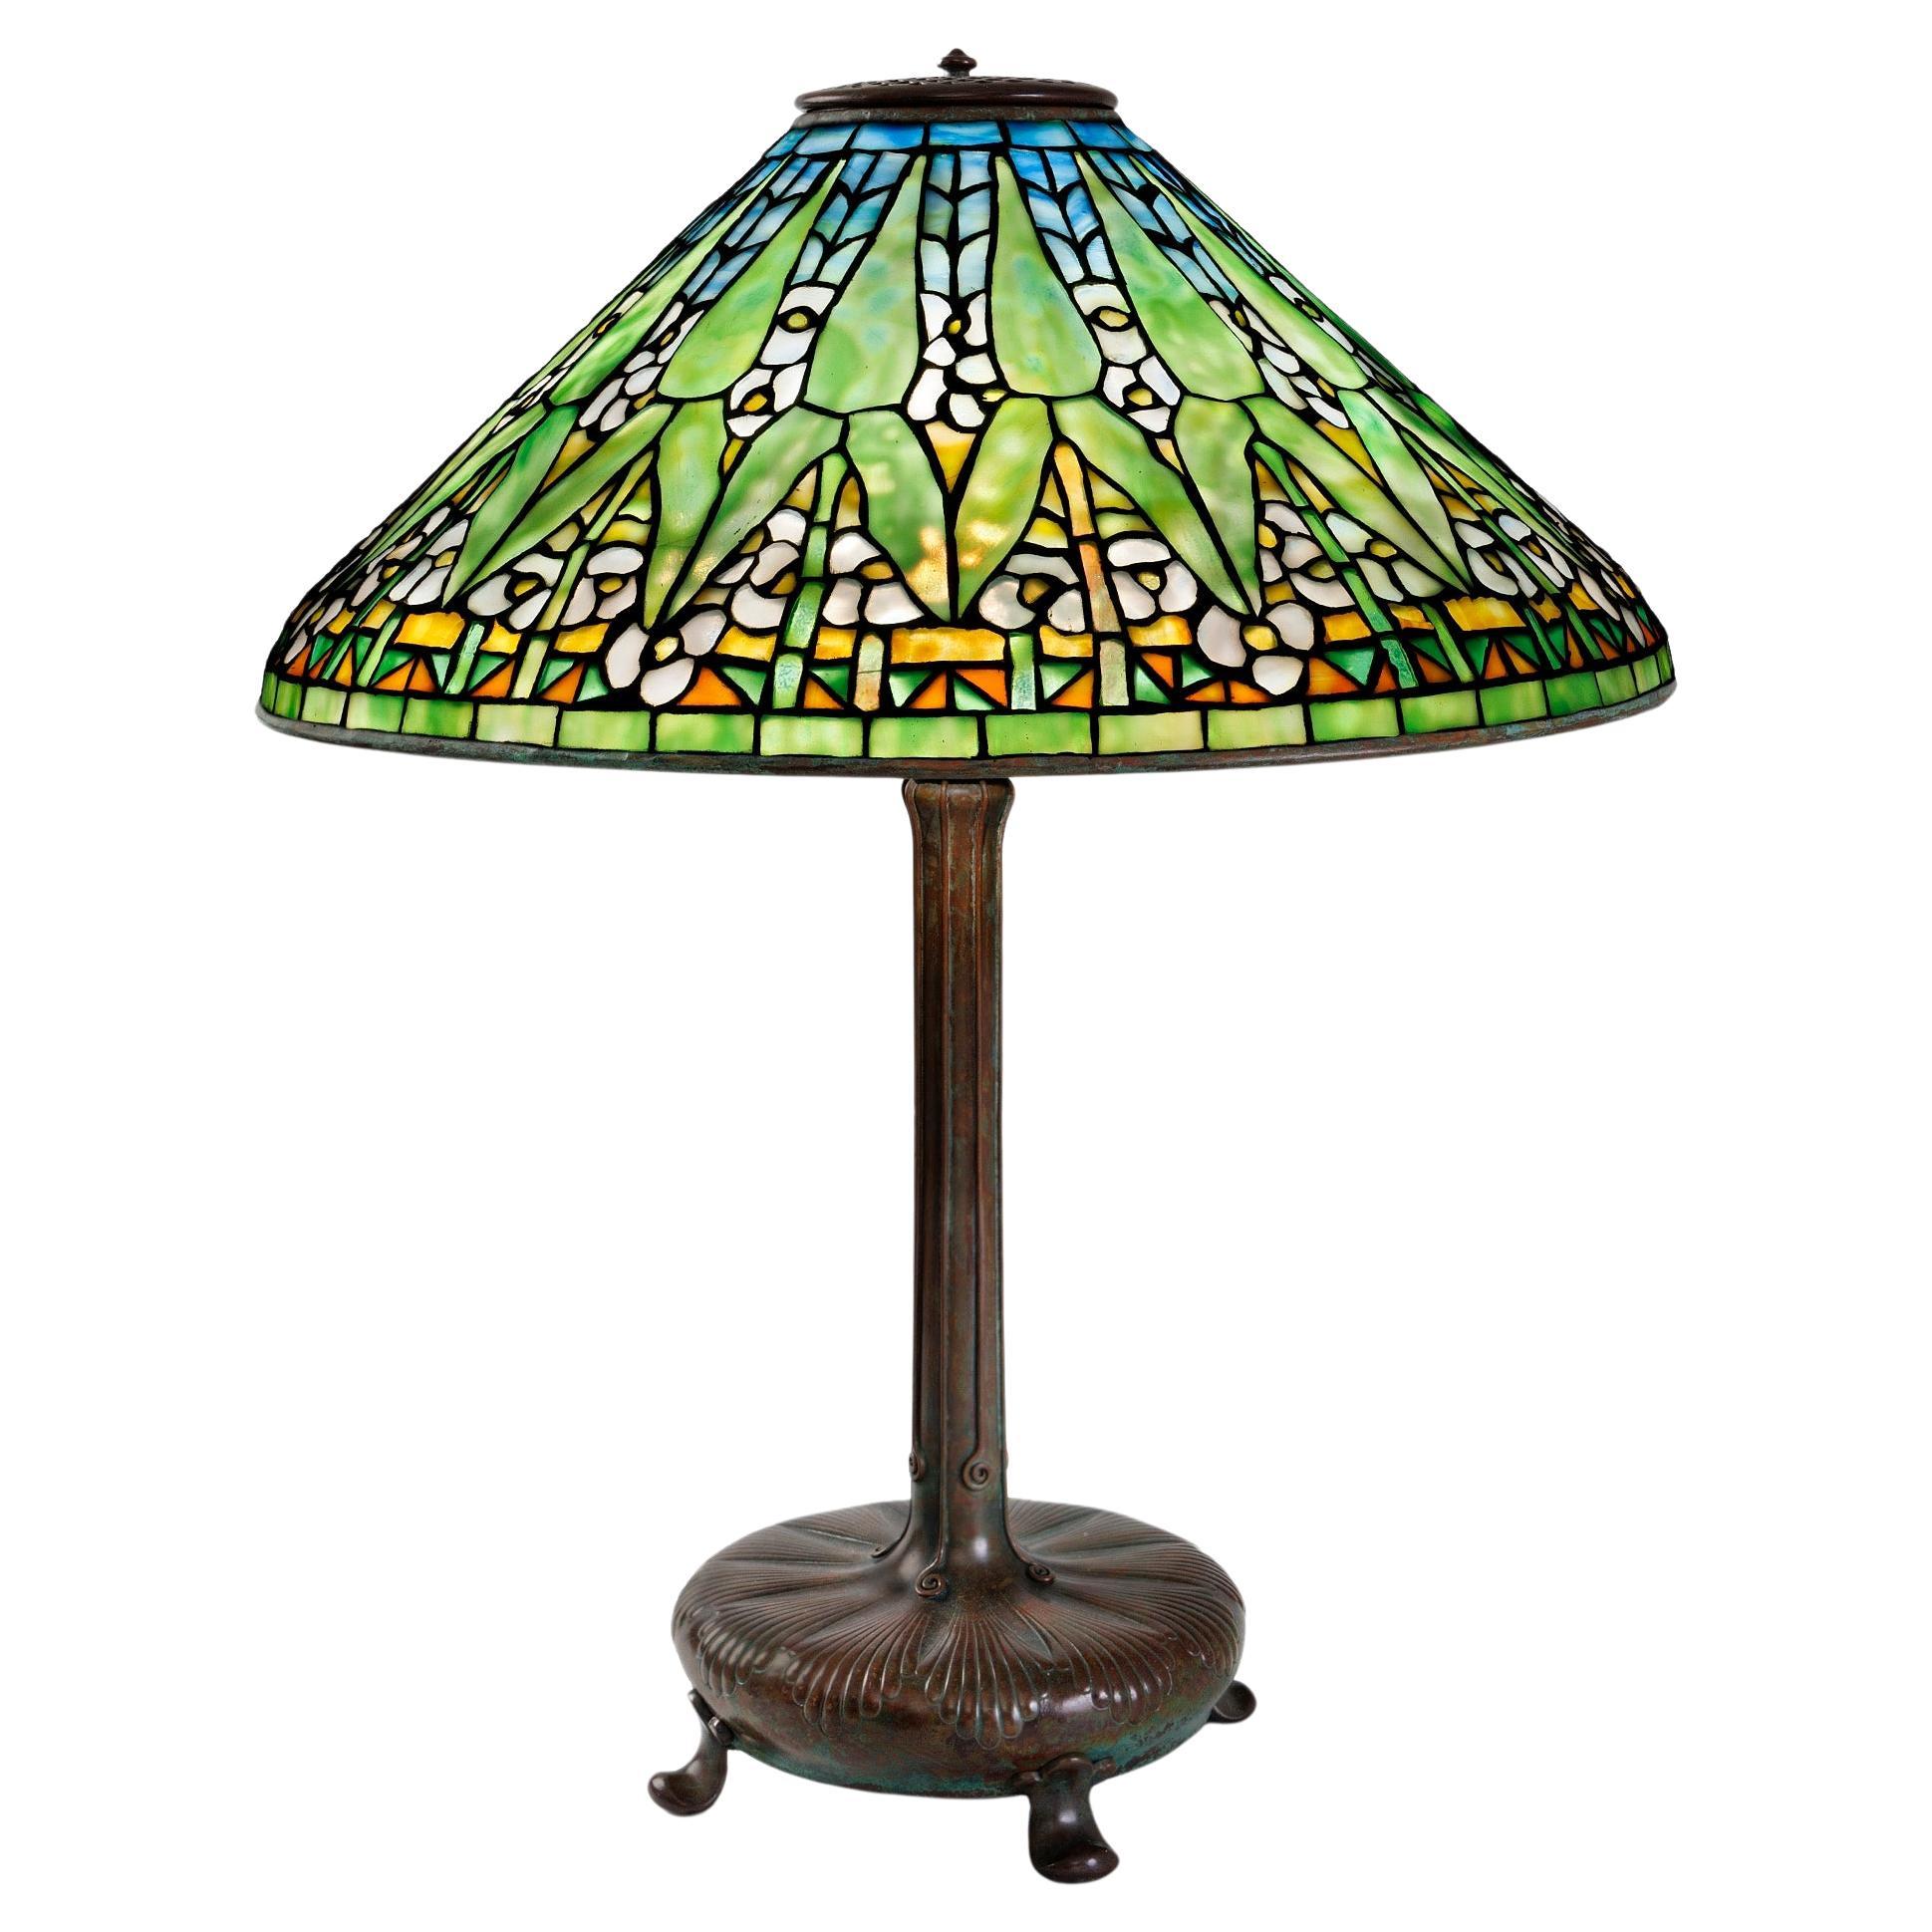 Tiffany Studios New York "Arrowhead" Table Lamp